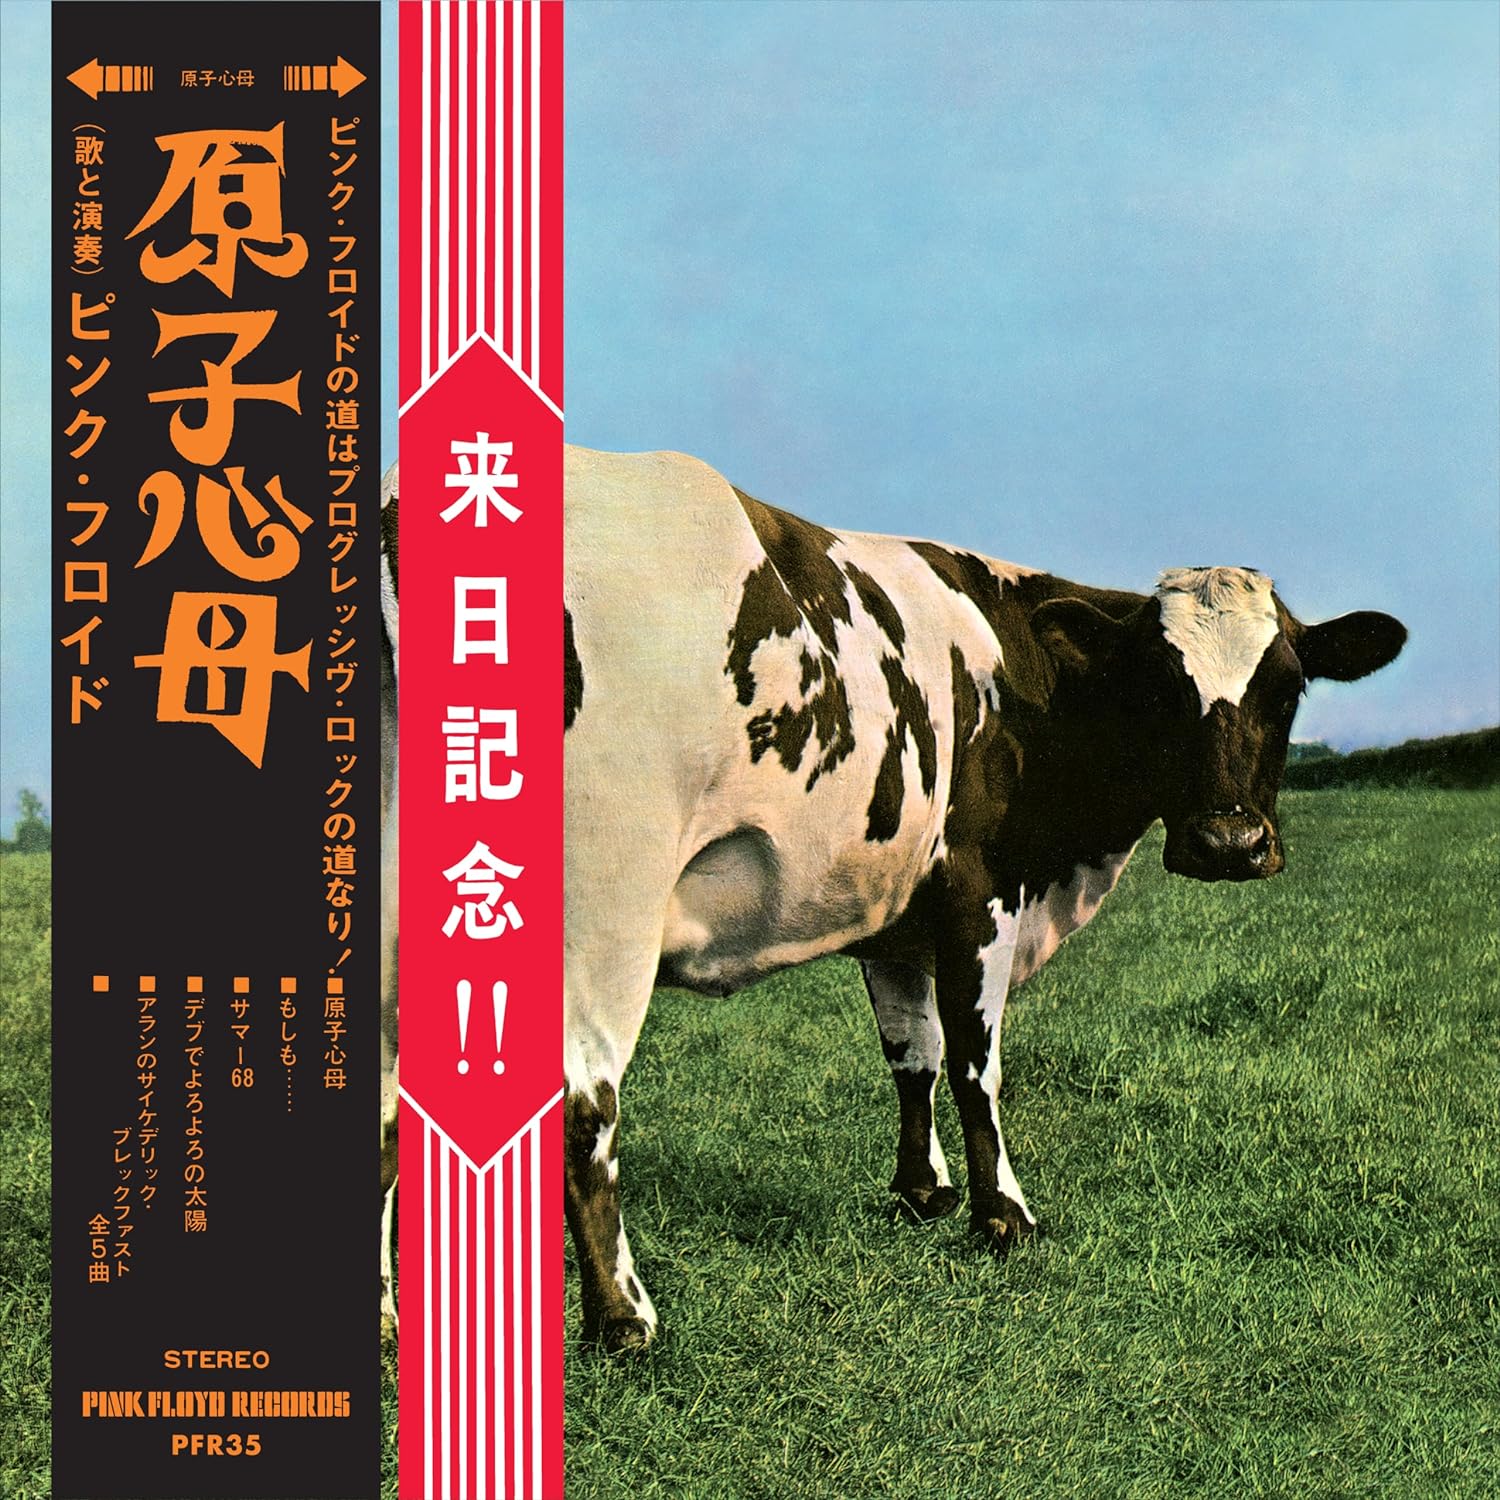 Pink Floyd: Atom Heart Mother - Hakone Aphrodite, Japan 1971  (Special Limited Edition CD+Blu-ray) vyjde 8.12.